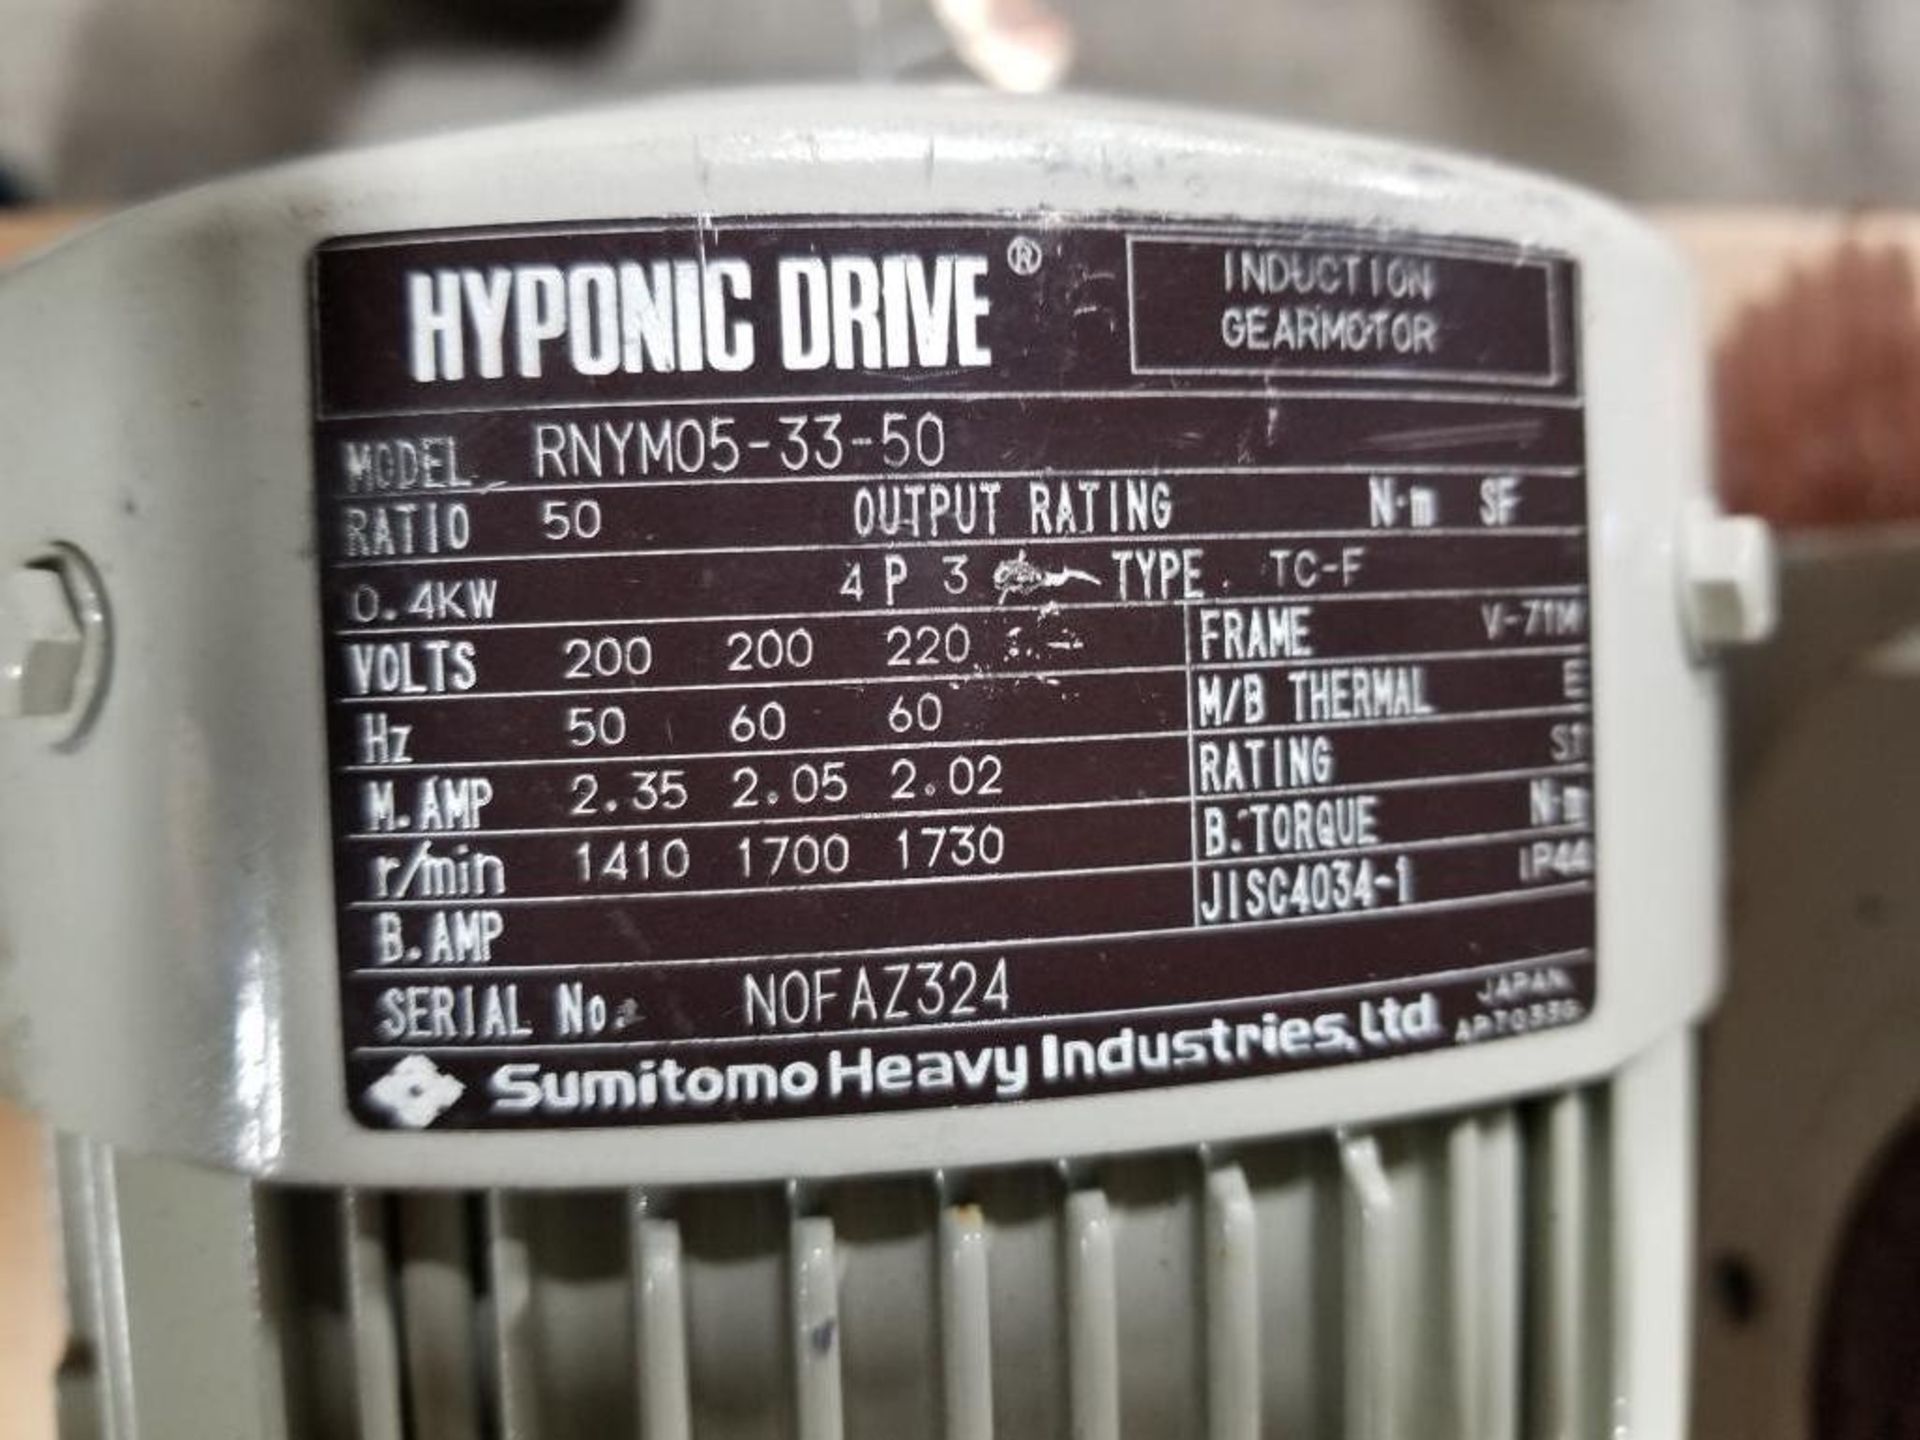 Sumitomo Heavy Industries, LTD. Hyponic Drive RNYM05-33050 induction gearmotor. - Image 2 of 4